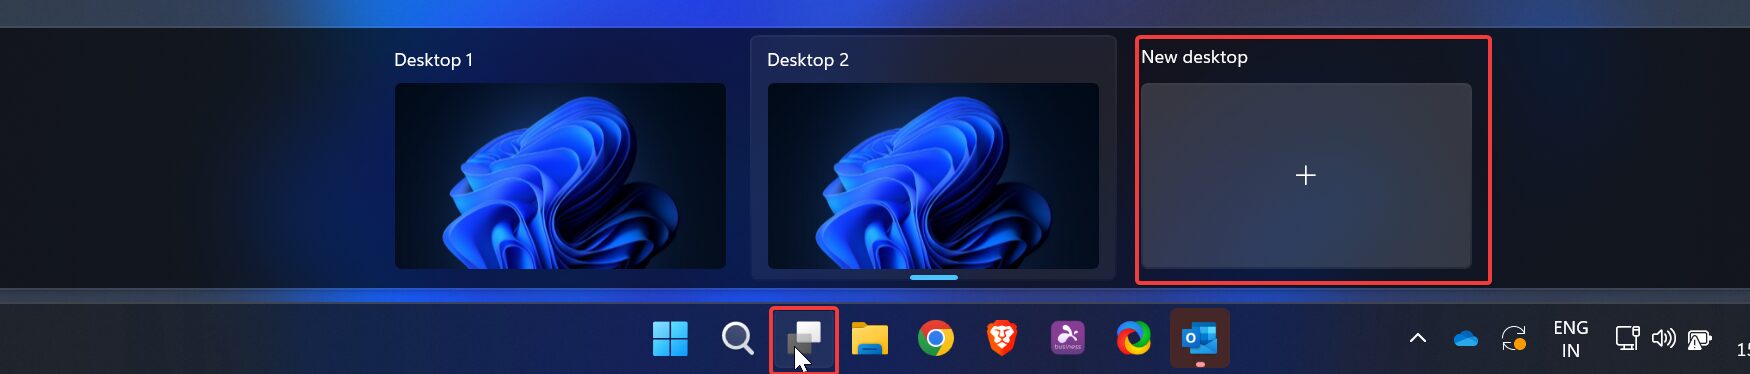 create new desktop